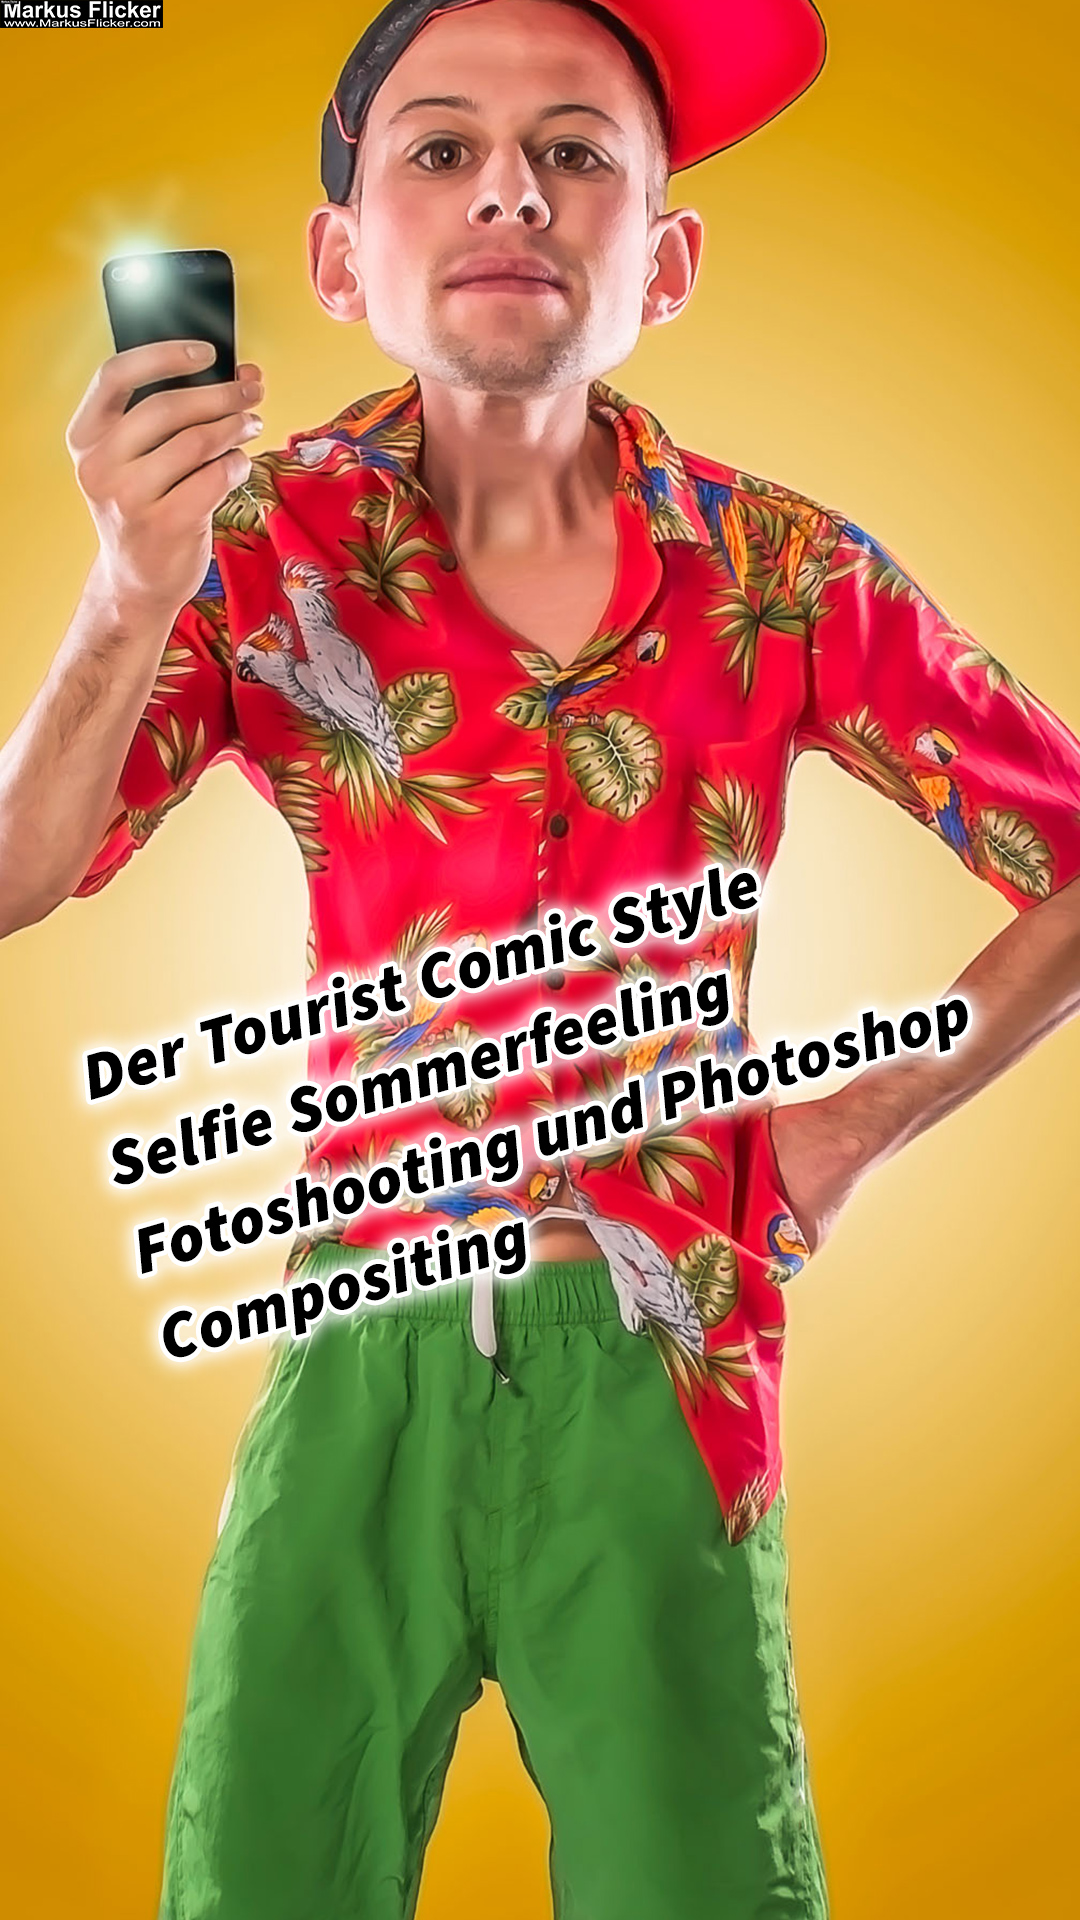 Der Tourist Comic Style Selfie Sommerfeeling Fotoshooting und Photoshop Compositing